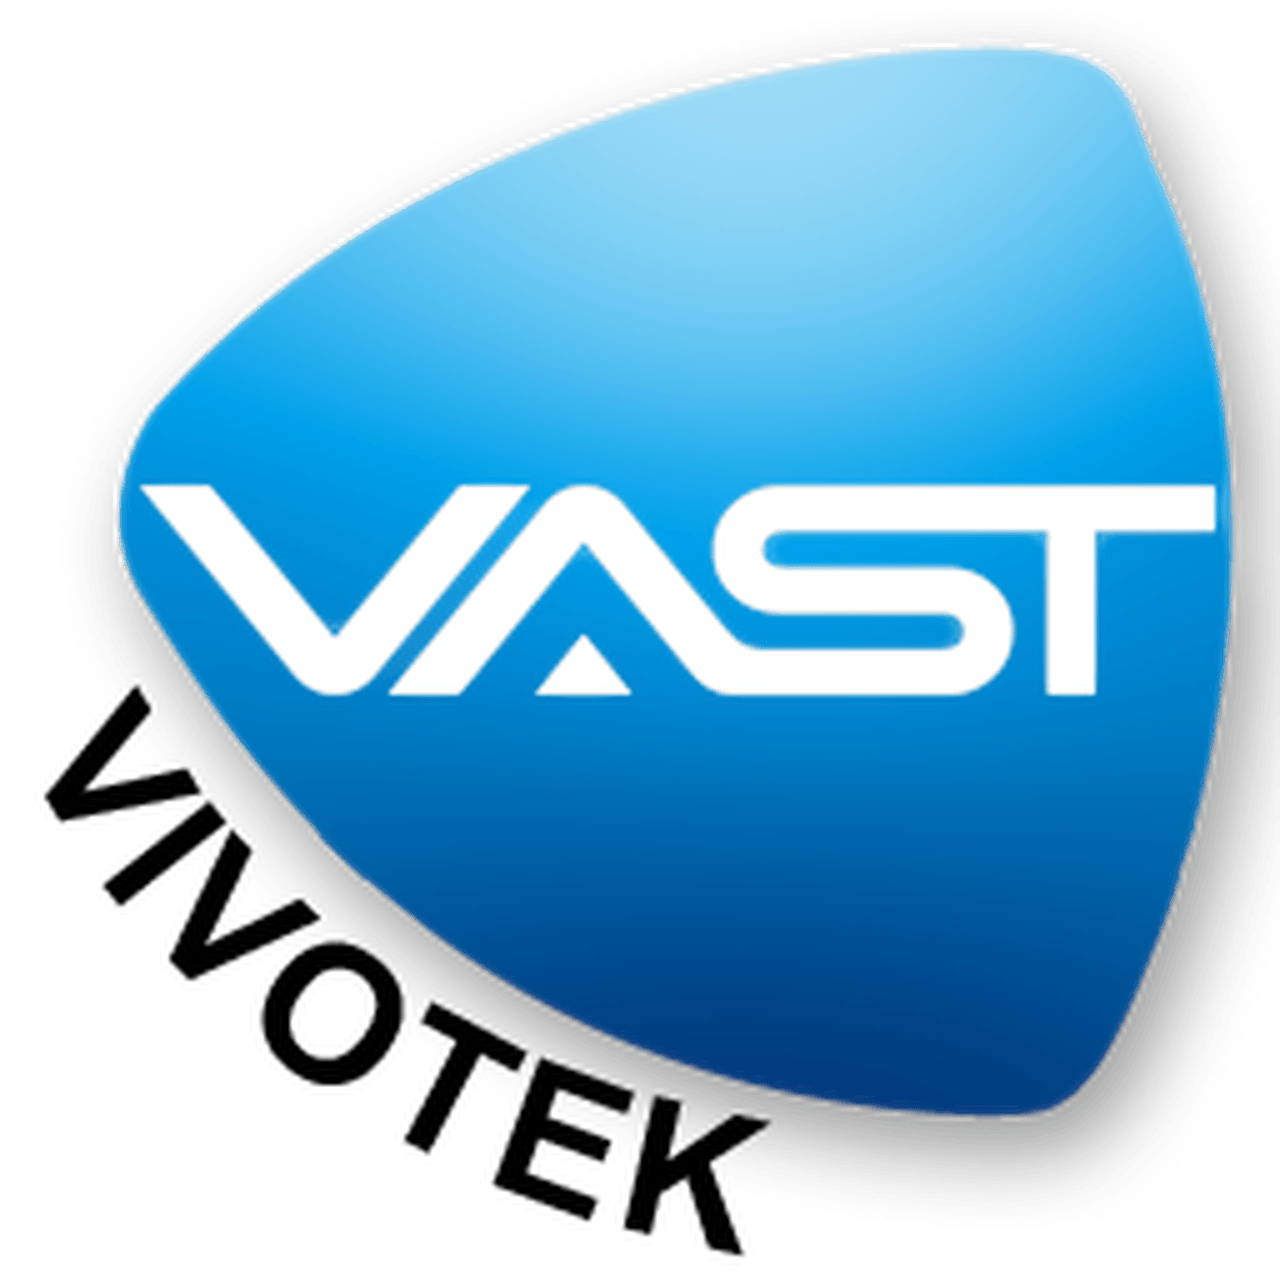 VIVOTEK Logo - Vivotek VAST Single Channel License